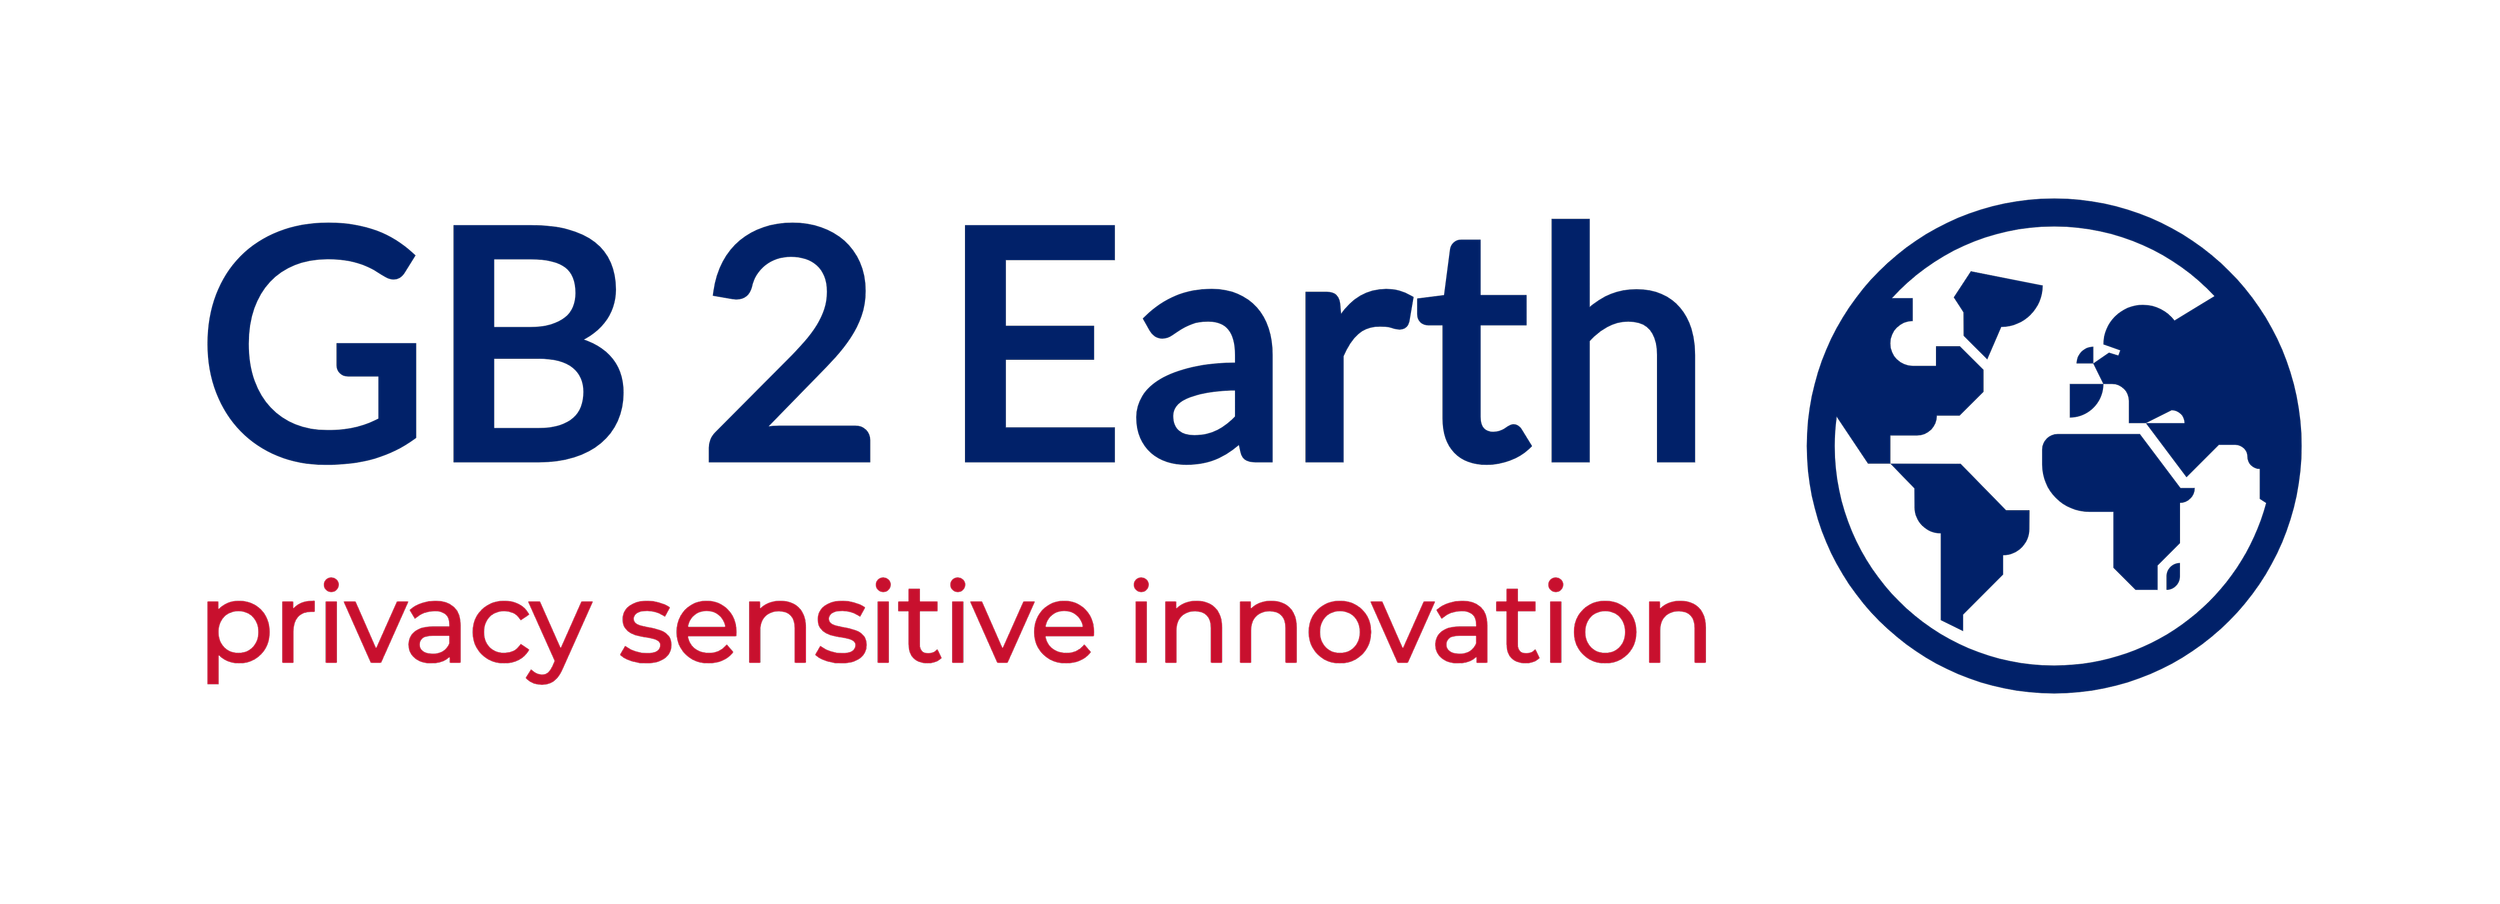 GB 2 Earth-logo.png